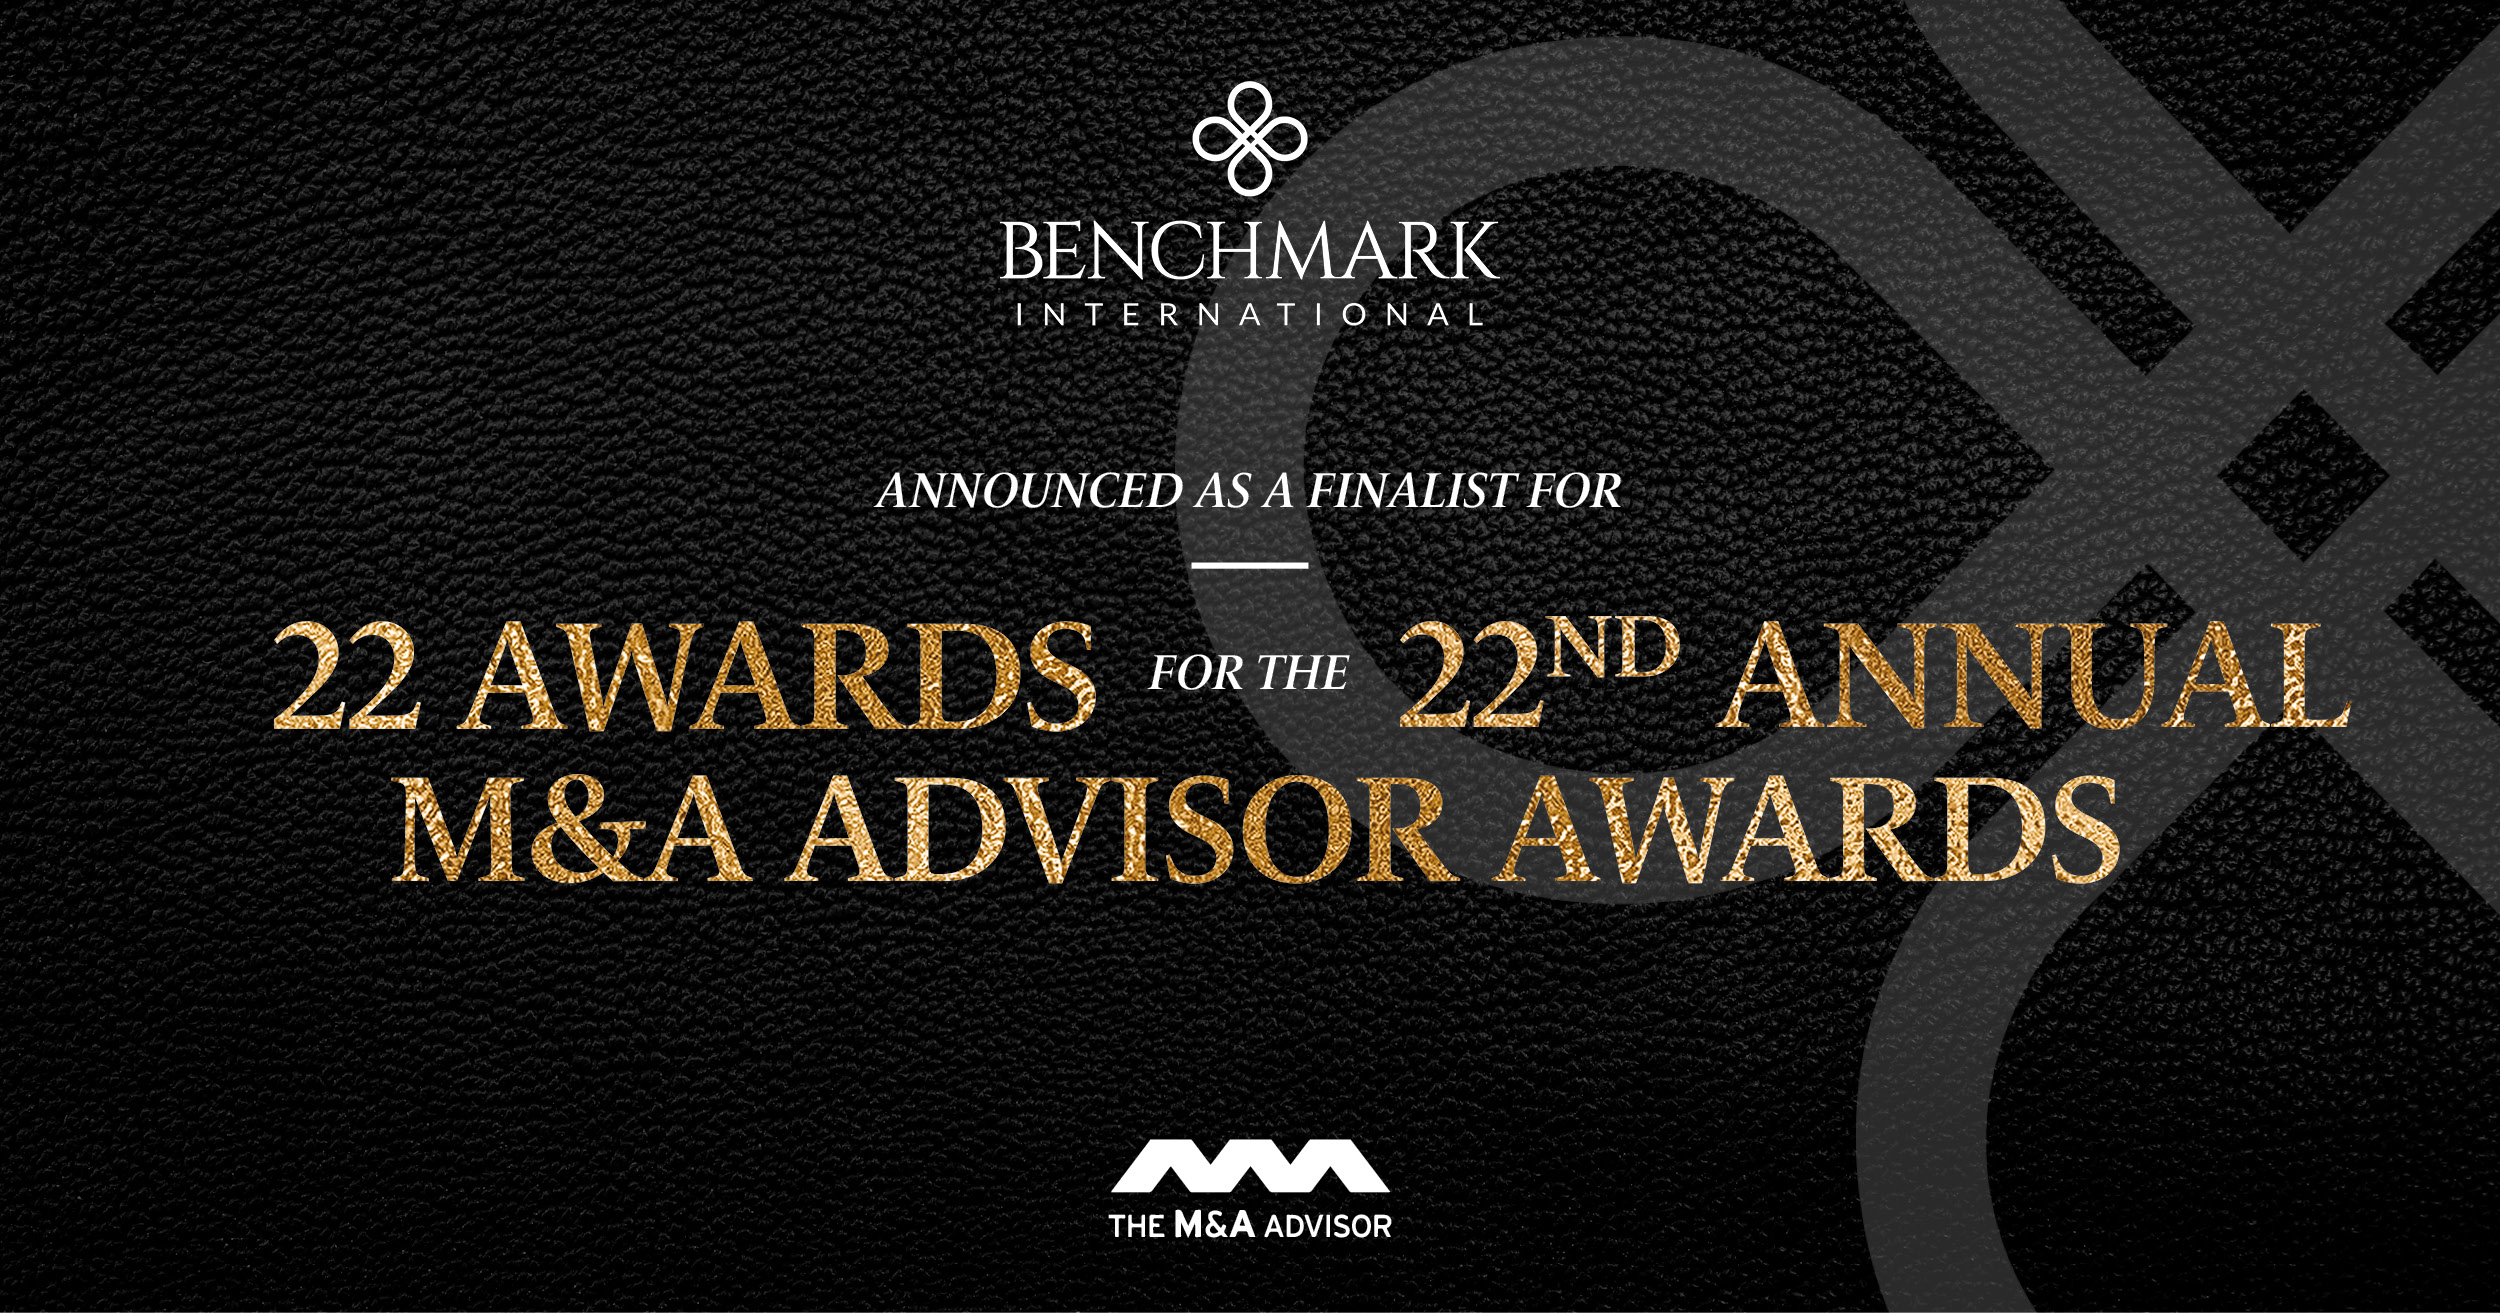 Benchmark International Is A Finalist For 22 M&A Advisor Awards